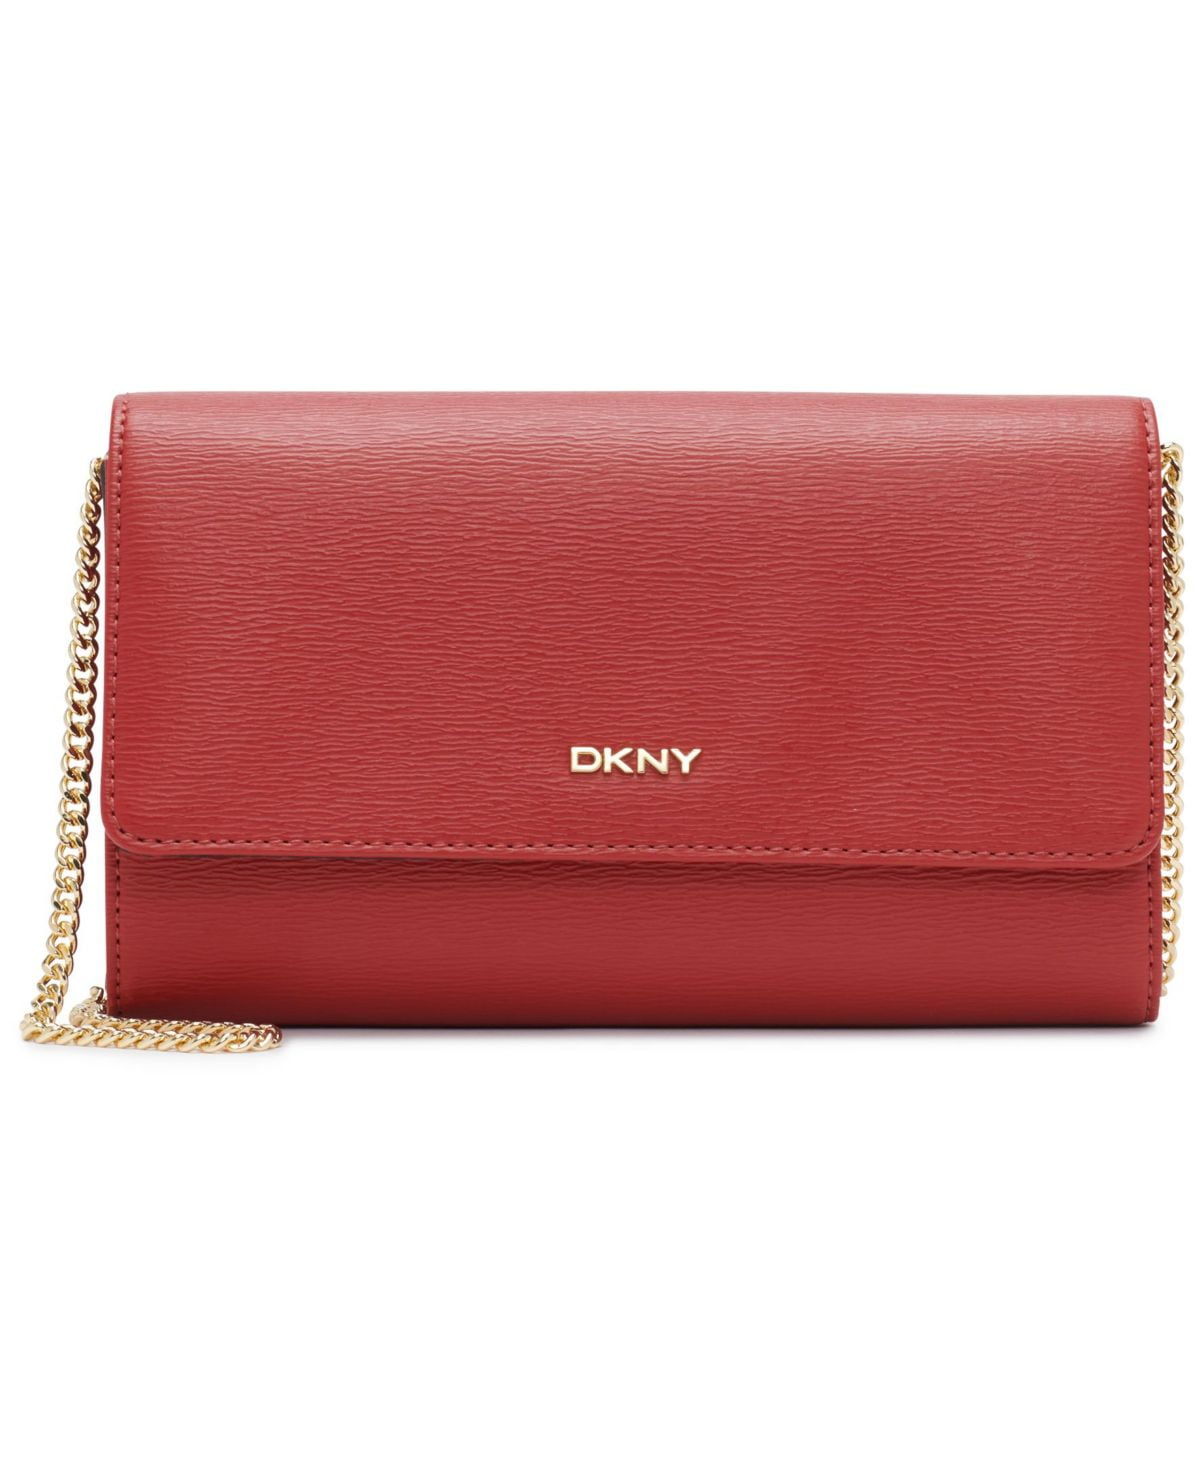 DKNY Chino/Caramel Medium Travel Wallet/Purse and Card Case Set - BNWT |  eBay